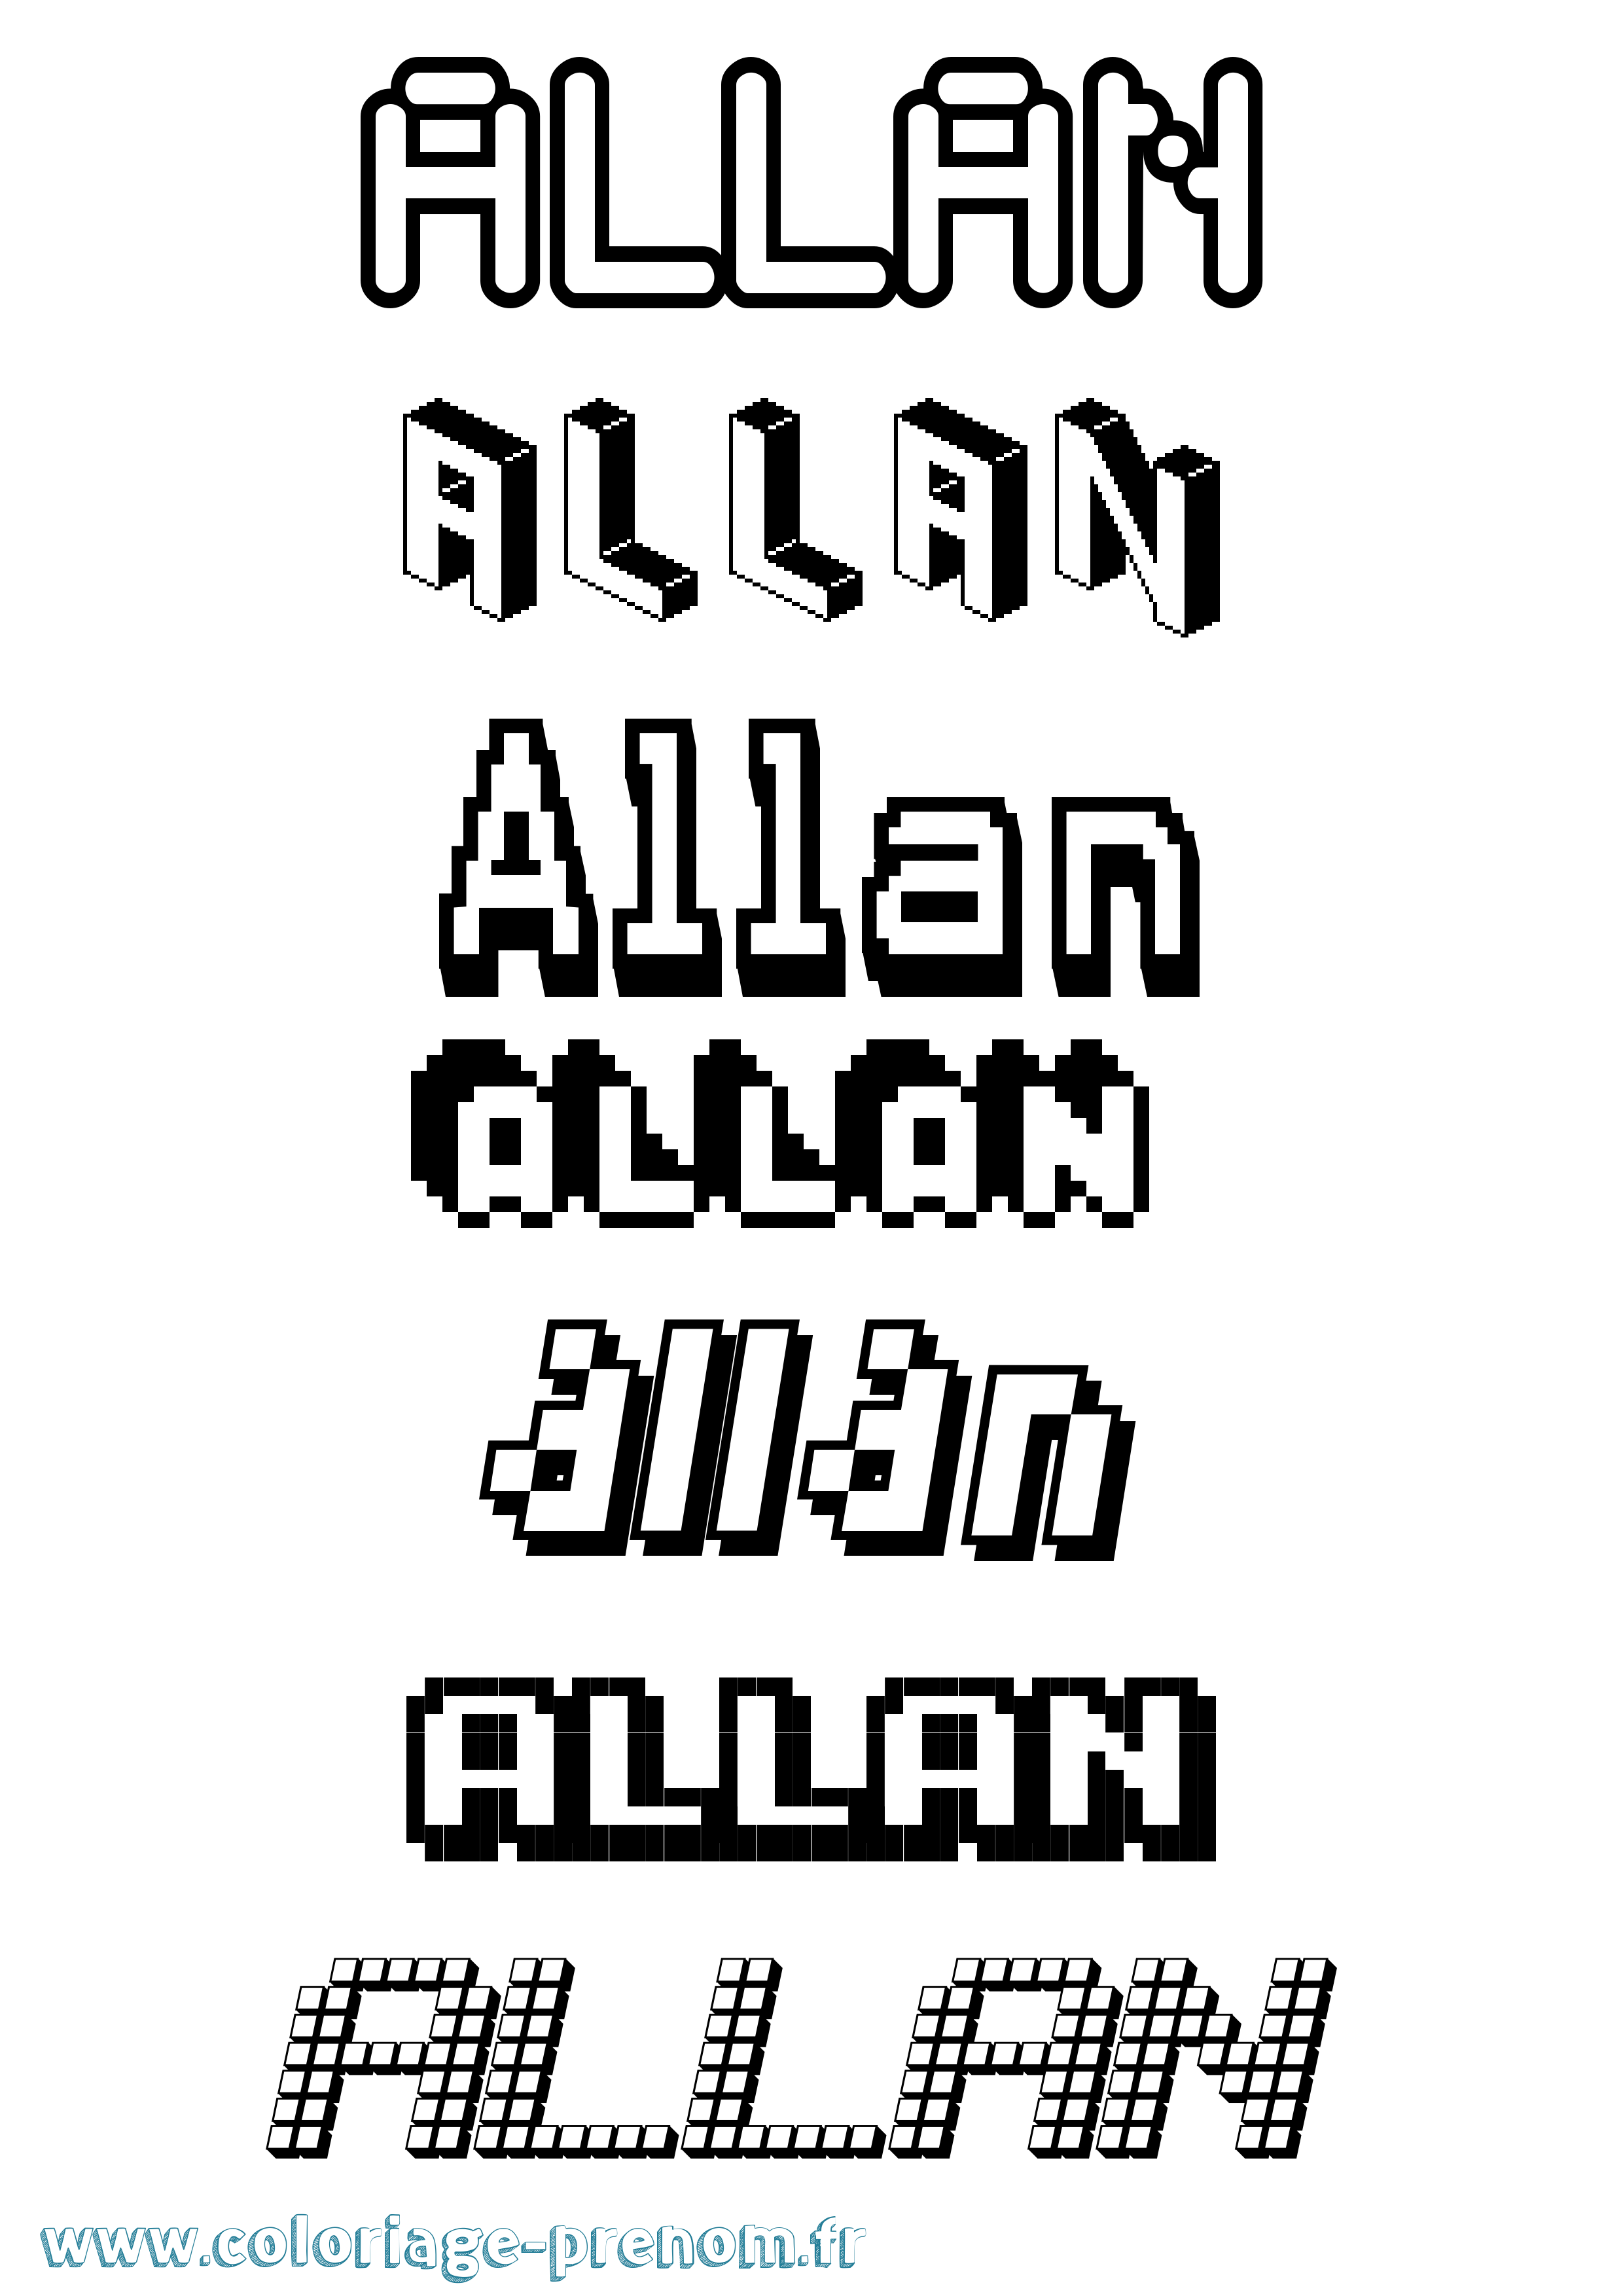 Coloriage prénom Allan